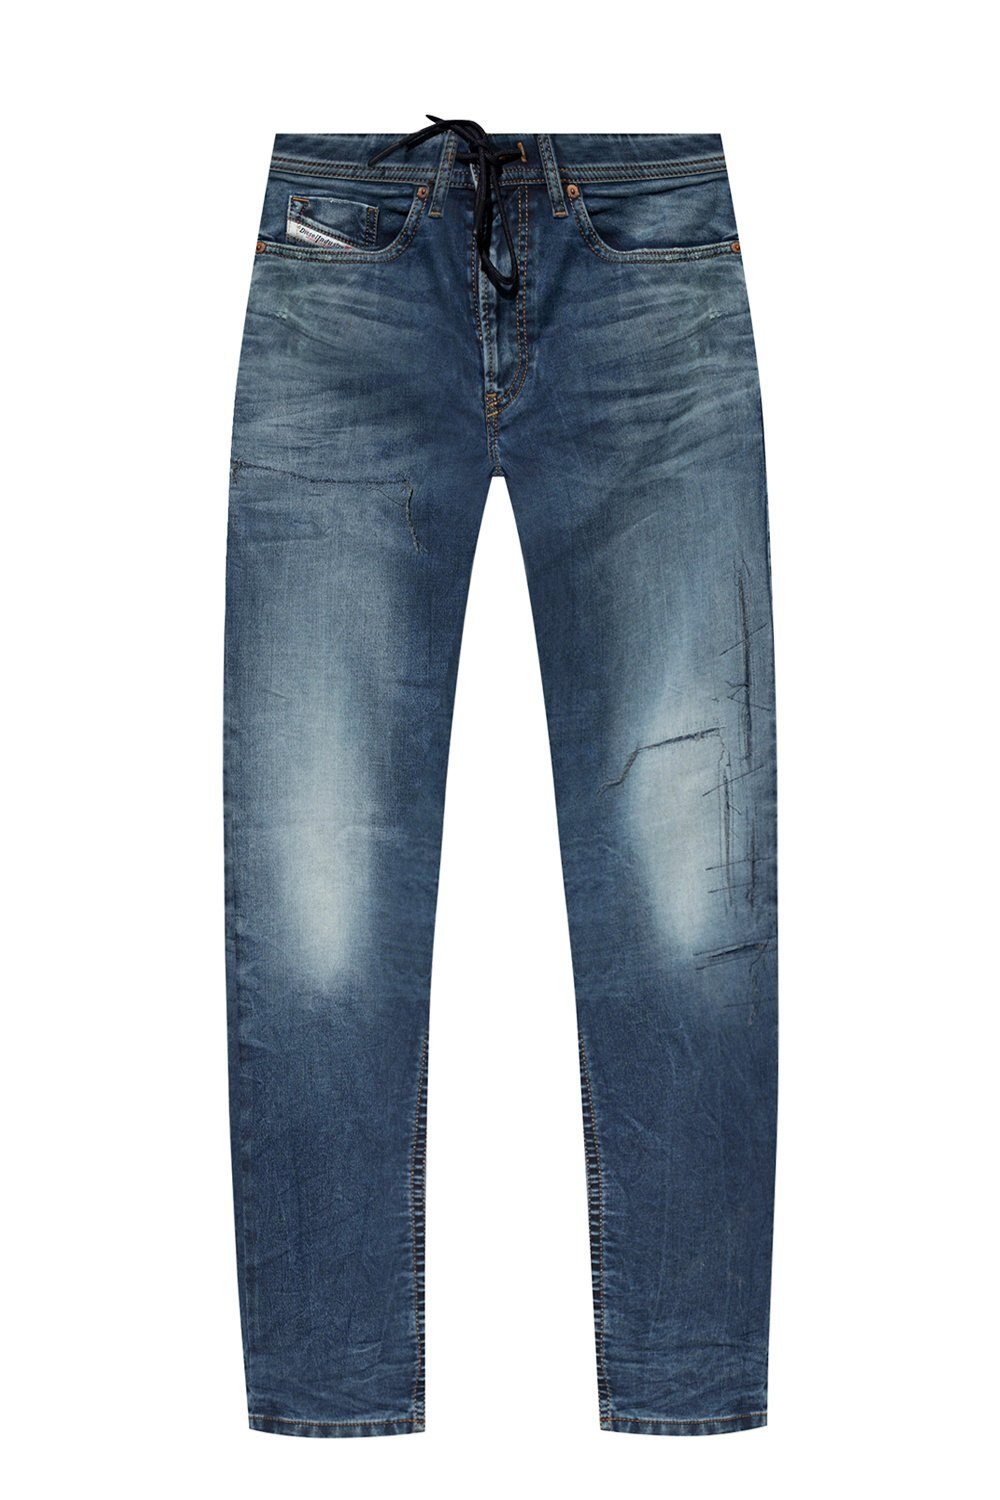 Diesel Slim-fit-Jeans Stretch Jogg Jeans 069SZ - Länge:32 Thommer - Hose